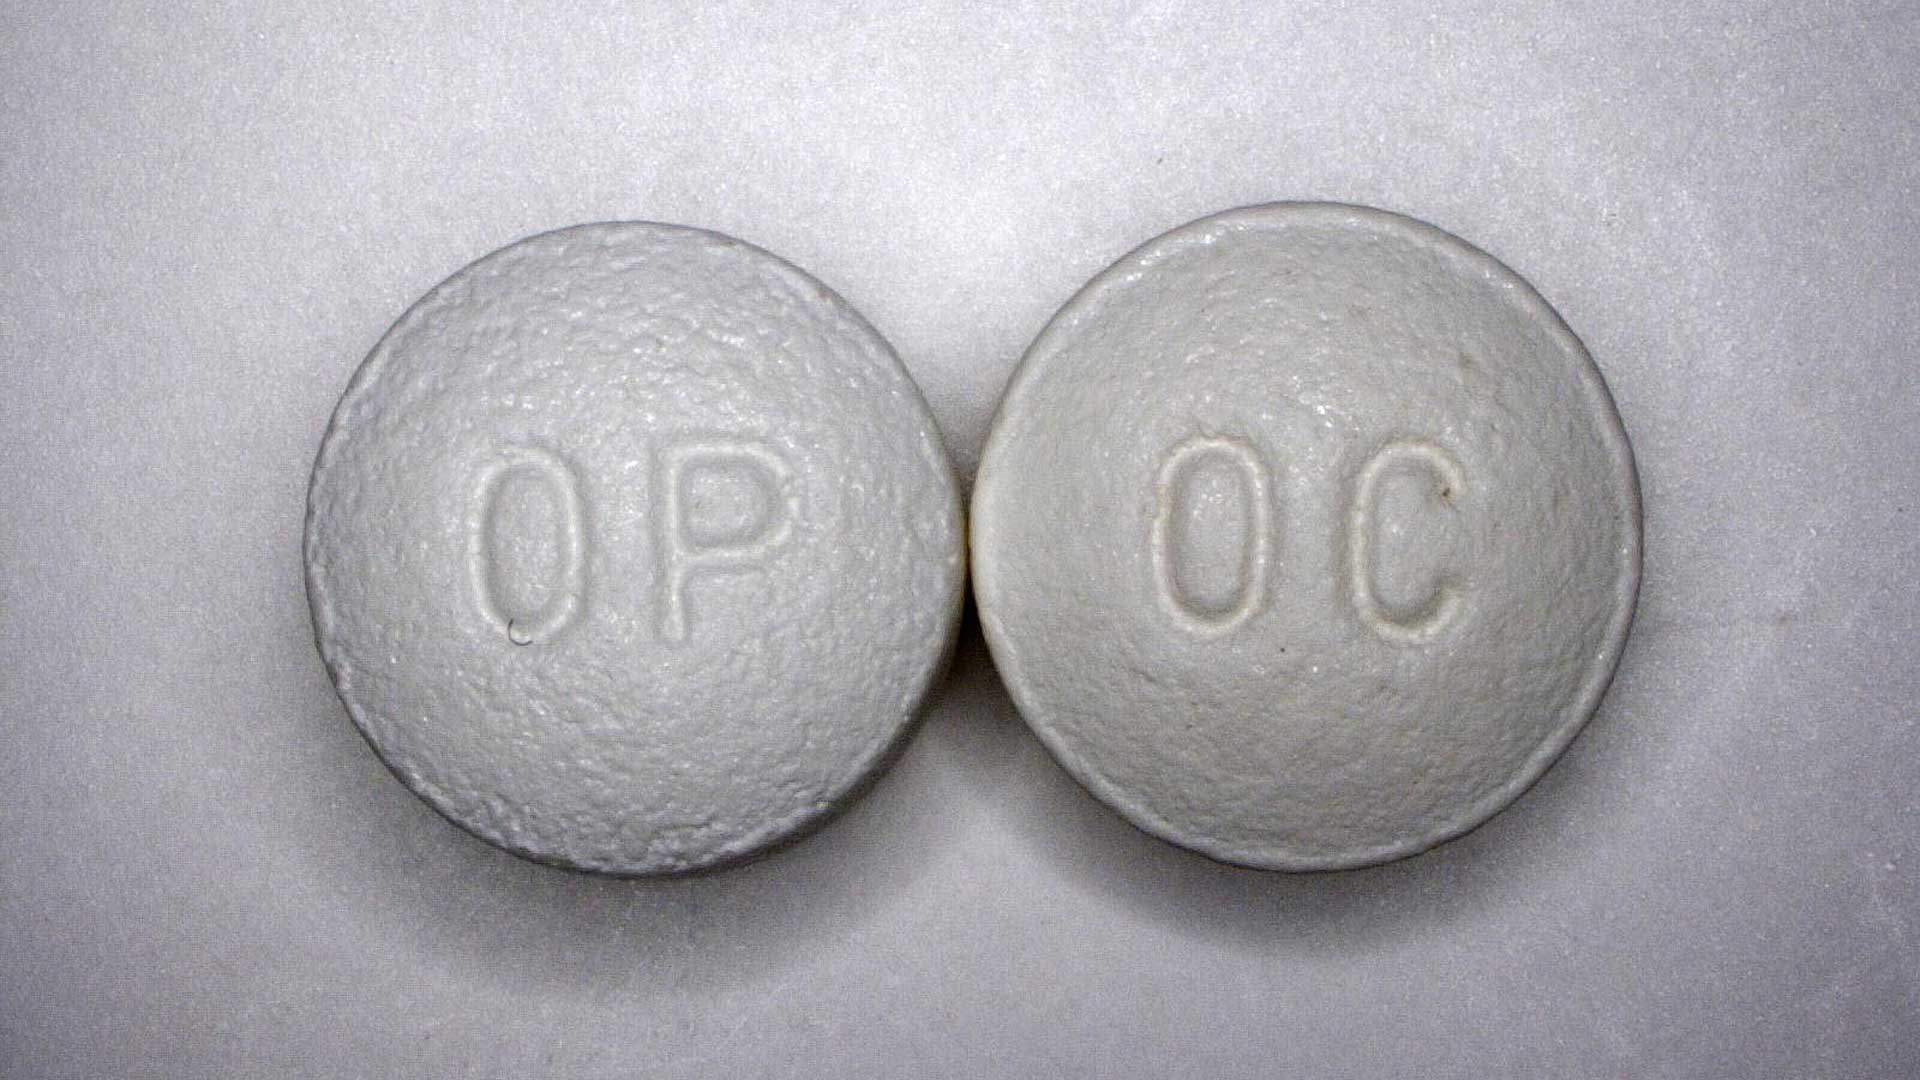 10mg pills of OxyContin. 